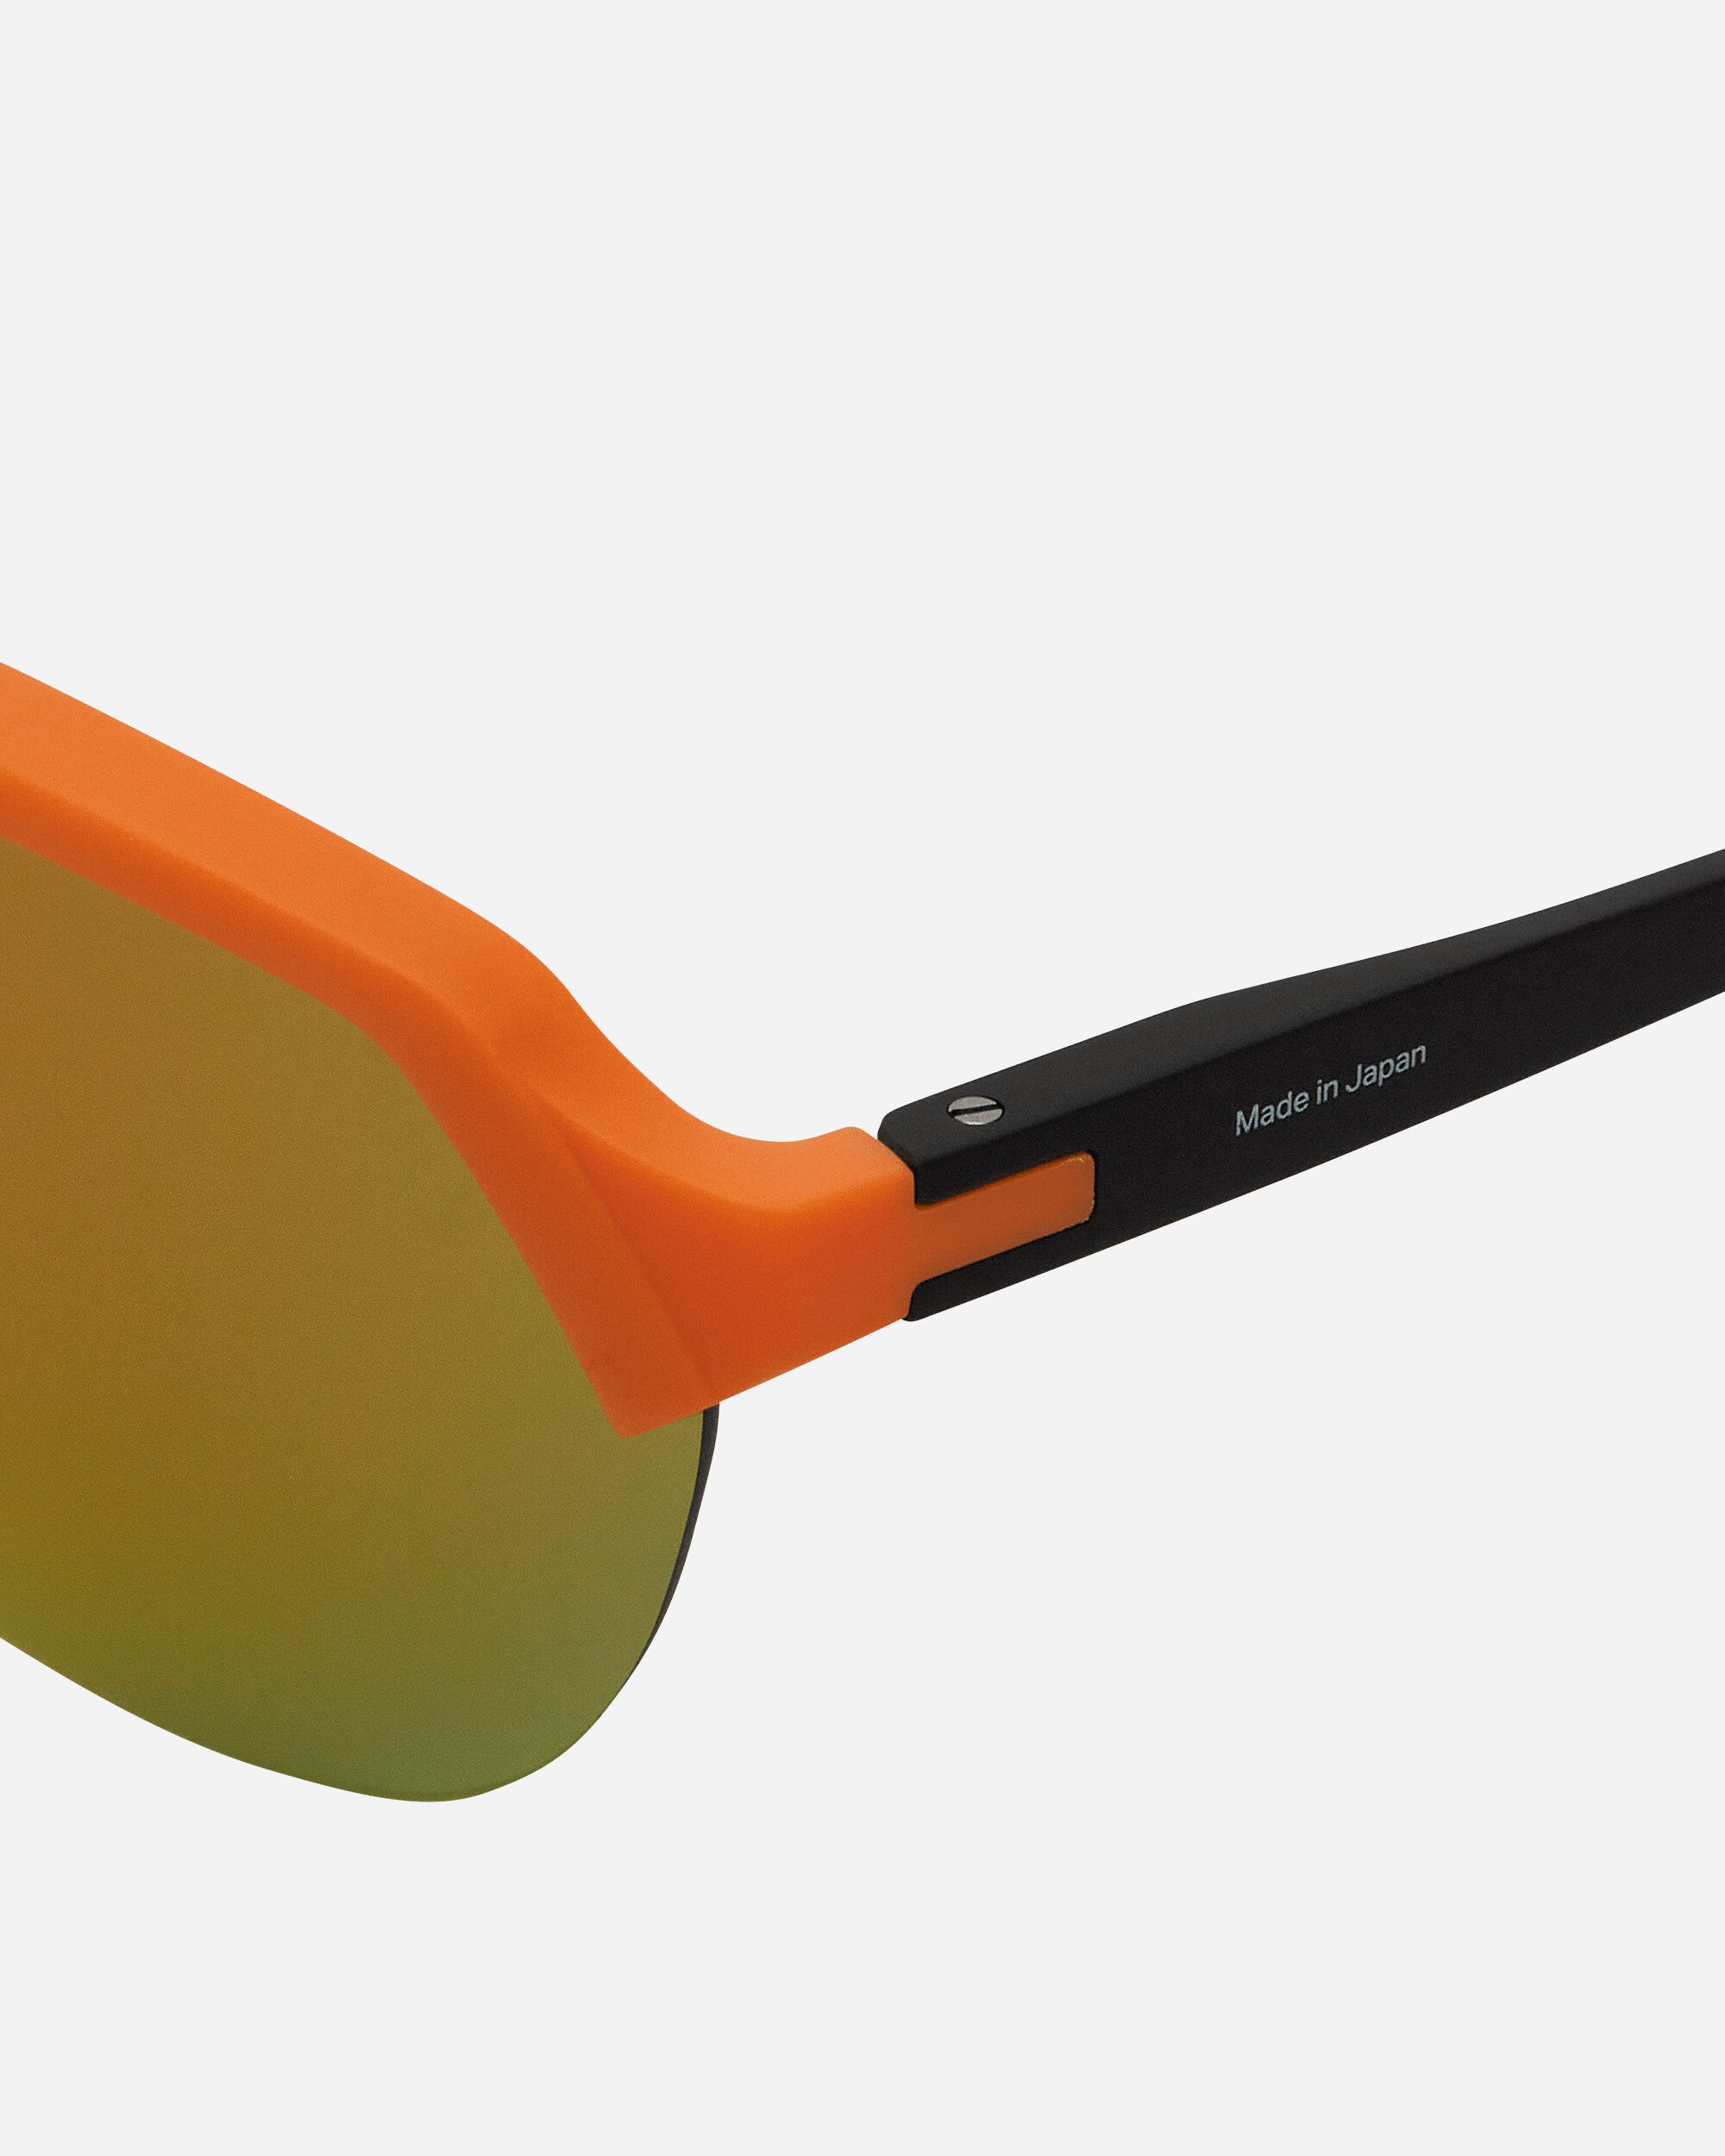 District Vision Nagata Speed Blade Infrared/D+ Fire Mirror Eyewear Sunglasses DVG002 IFR